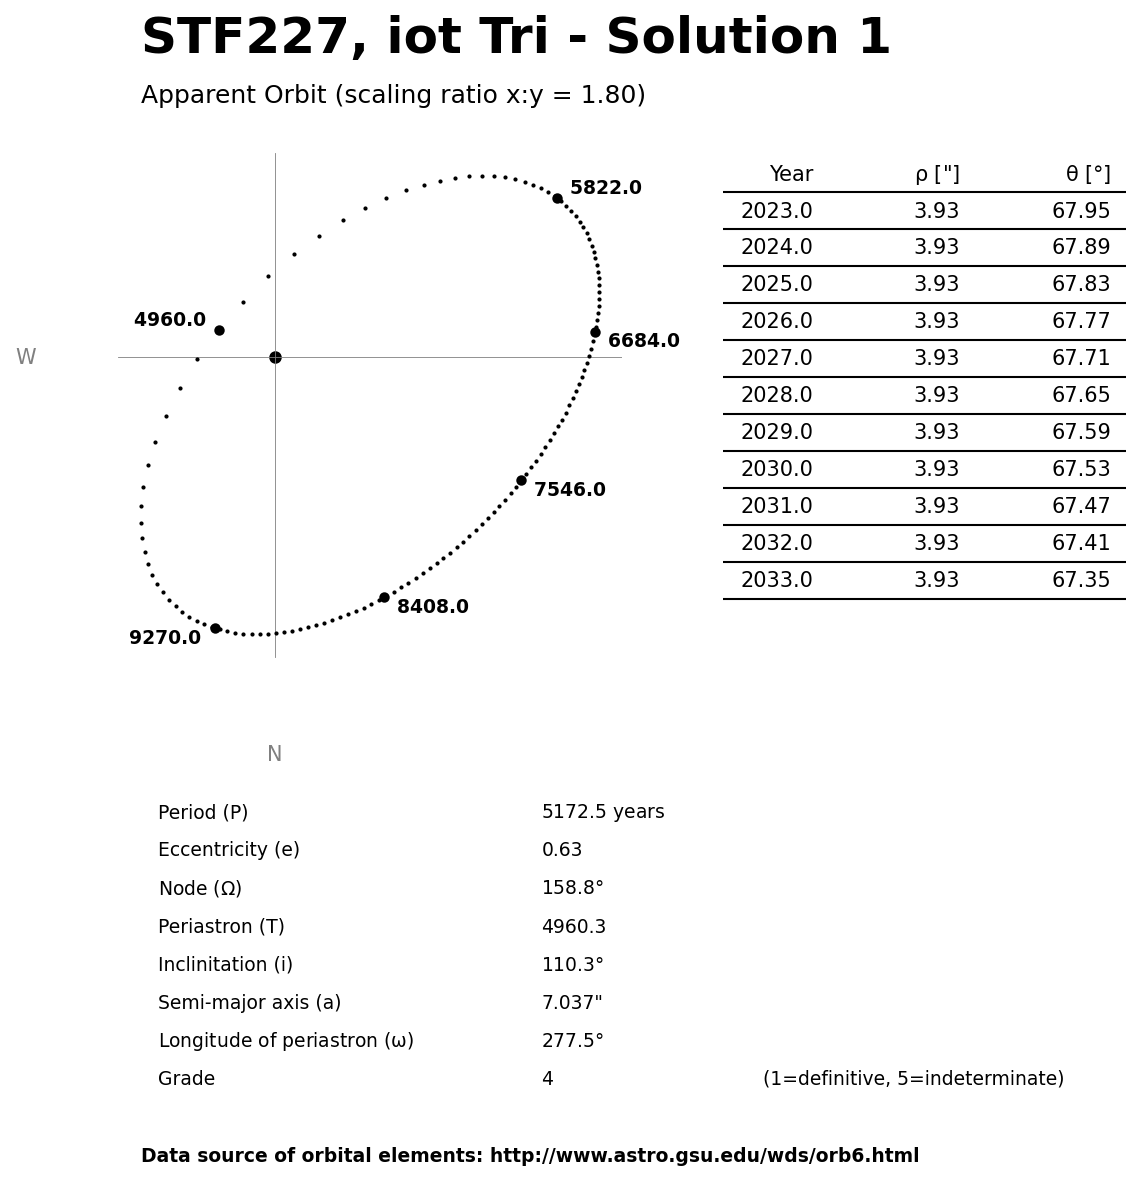 ../images/binary-star-orbits/STF227-orbit-solution-1.jpg